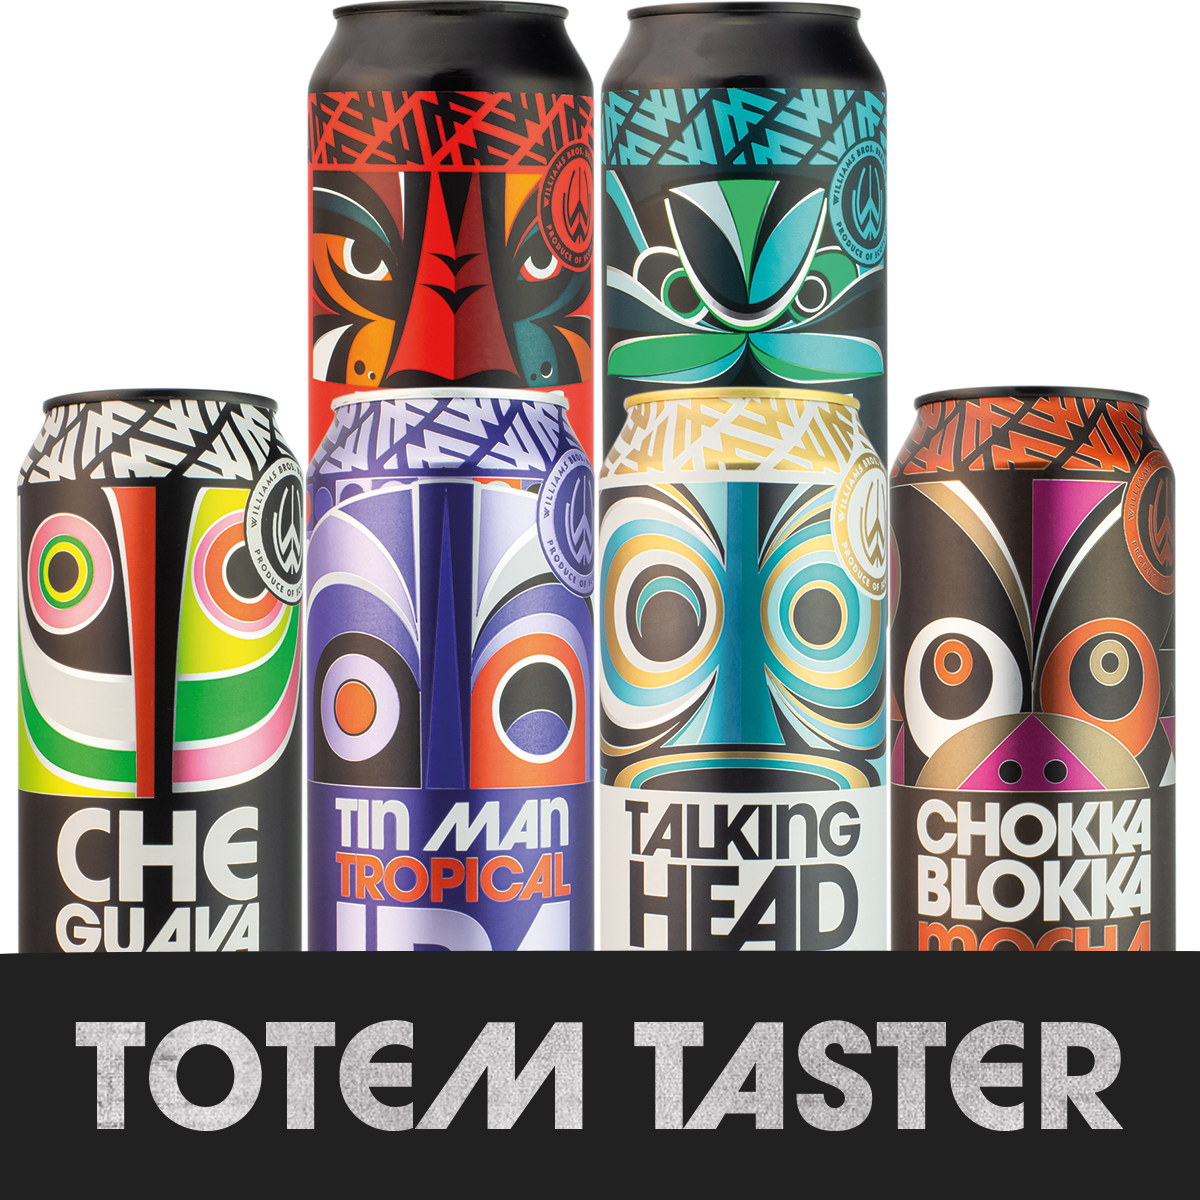 Totem Taster Pack